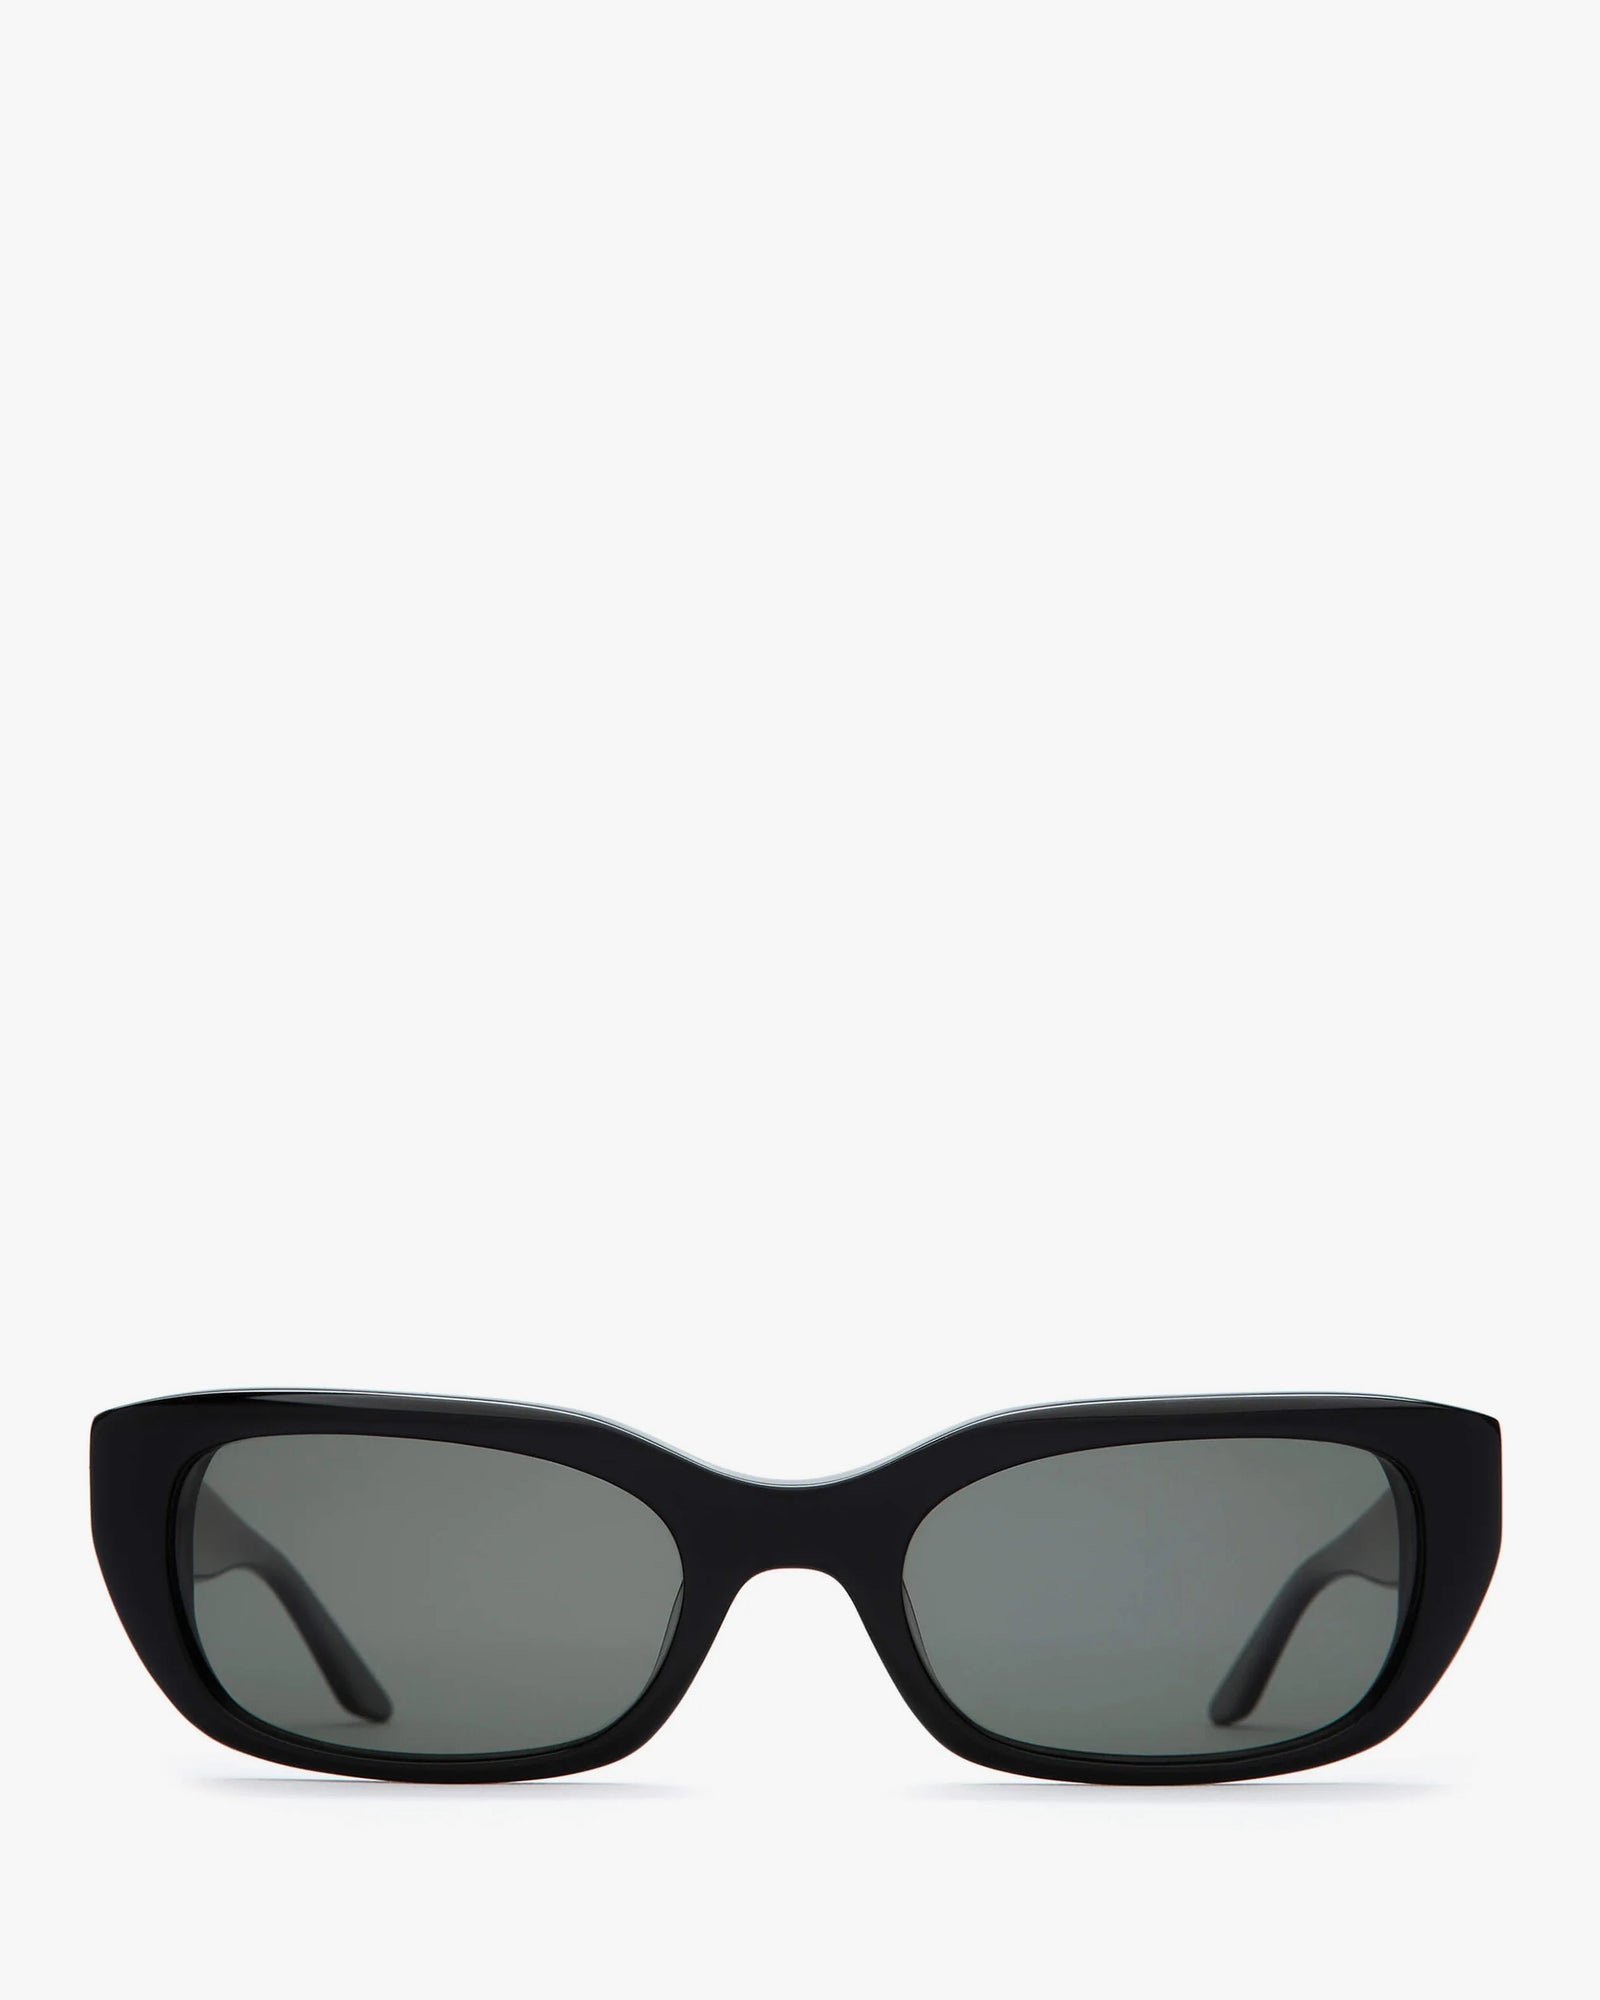 Black Gothic Breeze Sunglasses from CRAP Eyewear